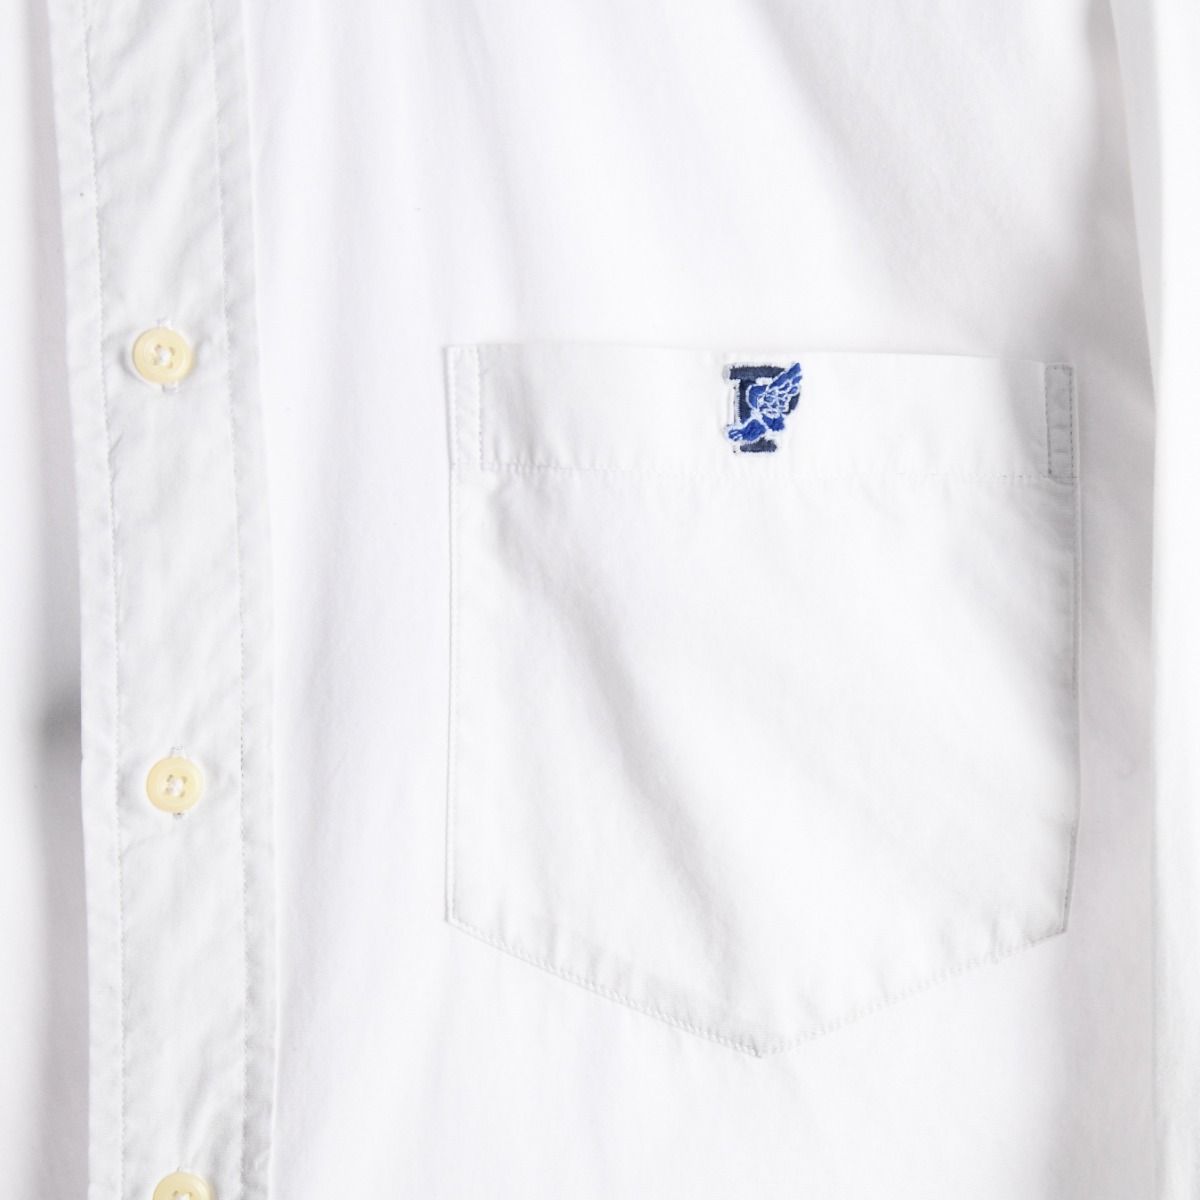 Polo Ralph Lauren P-Wing Blaire Shirt